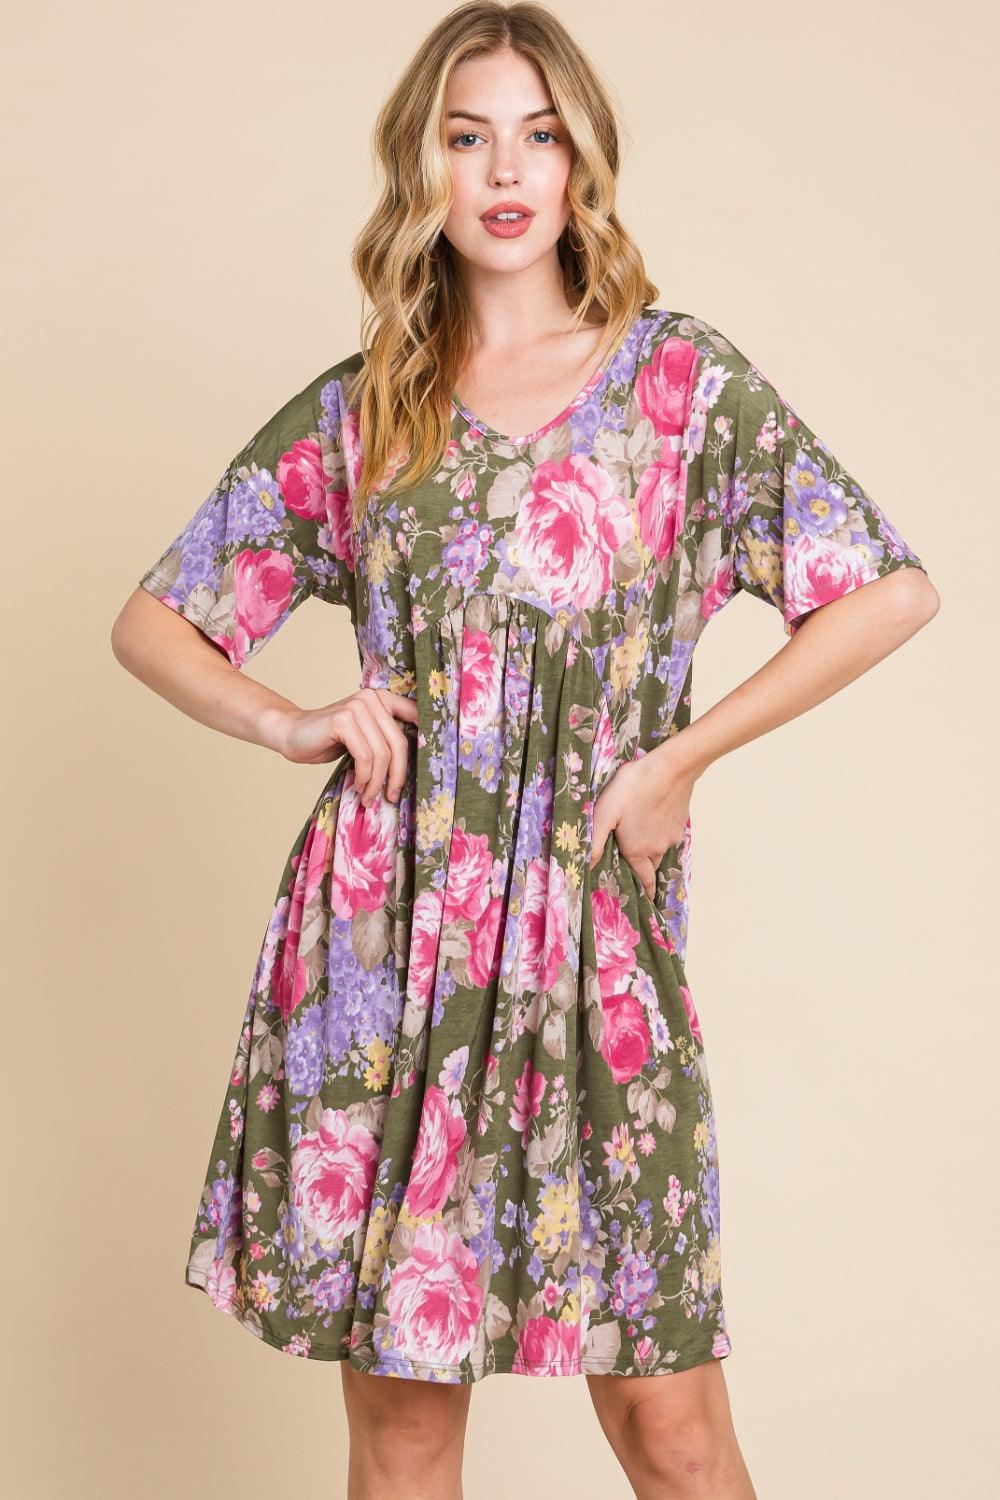 BOMBOM Flower Print V-Neck Ruched Dress - AMIClubwear